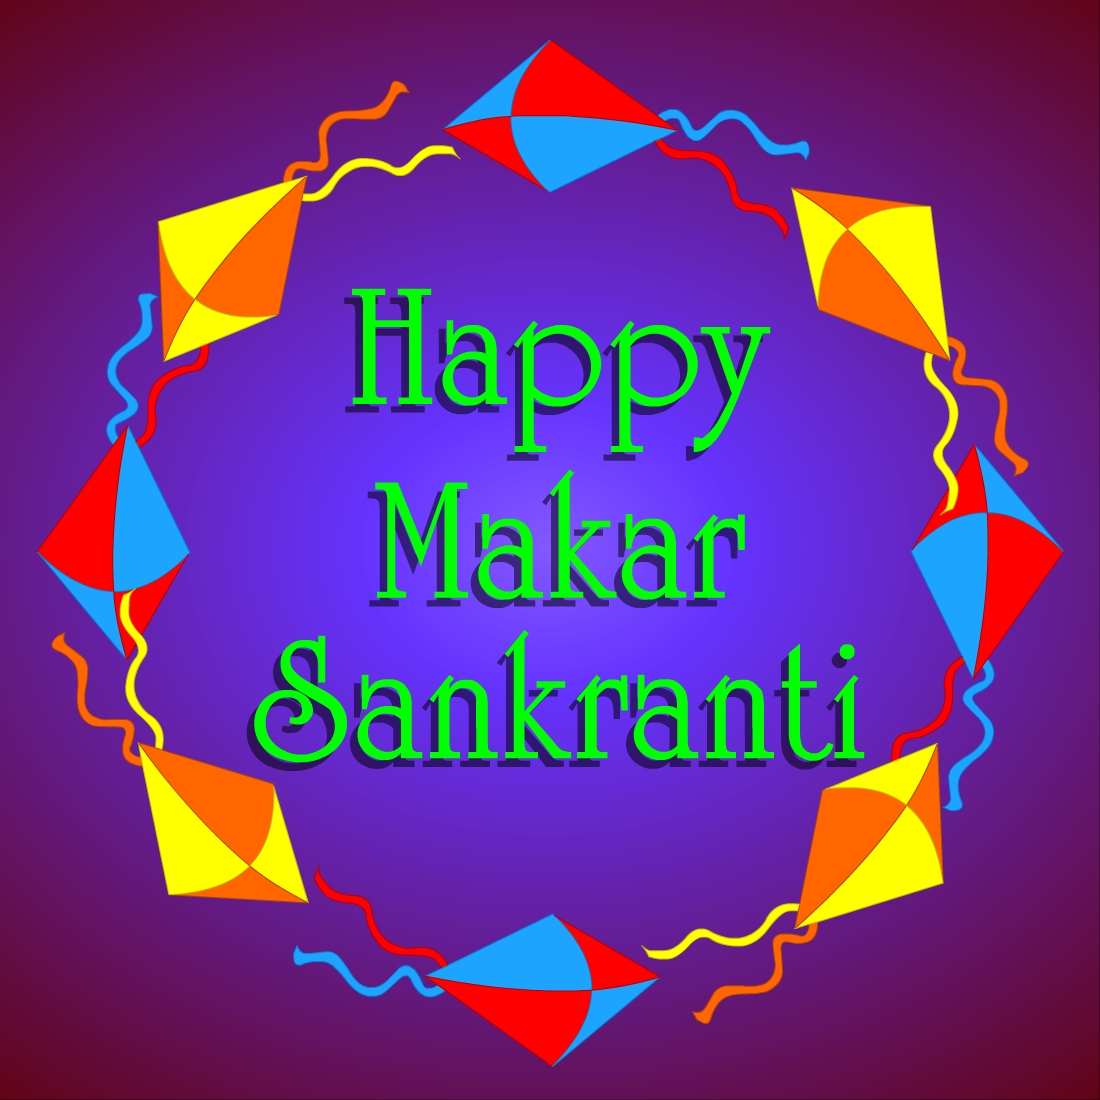 Festive illustration in a purple for celebrating Makar Sankranti.